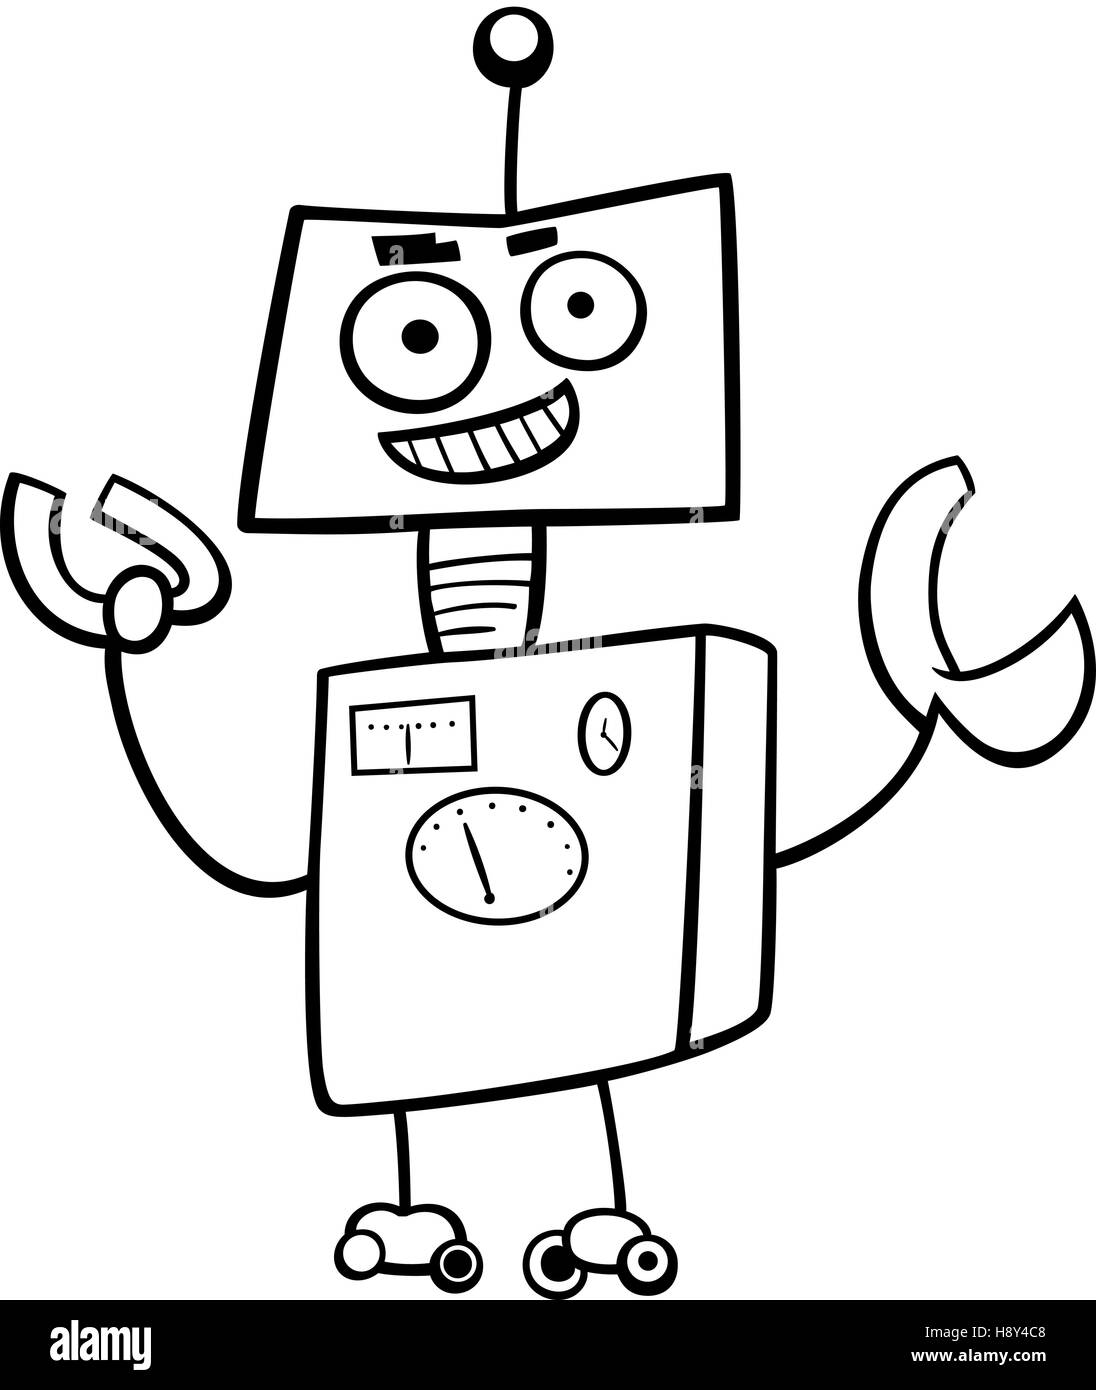 Robots Libro para colorear niños: Robot para niños libros